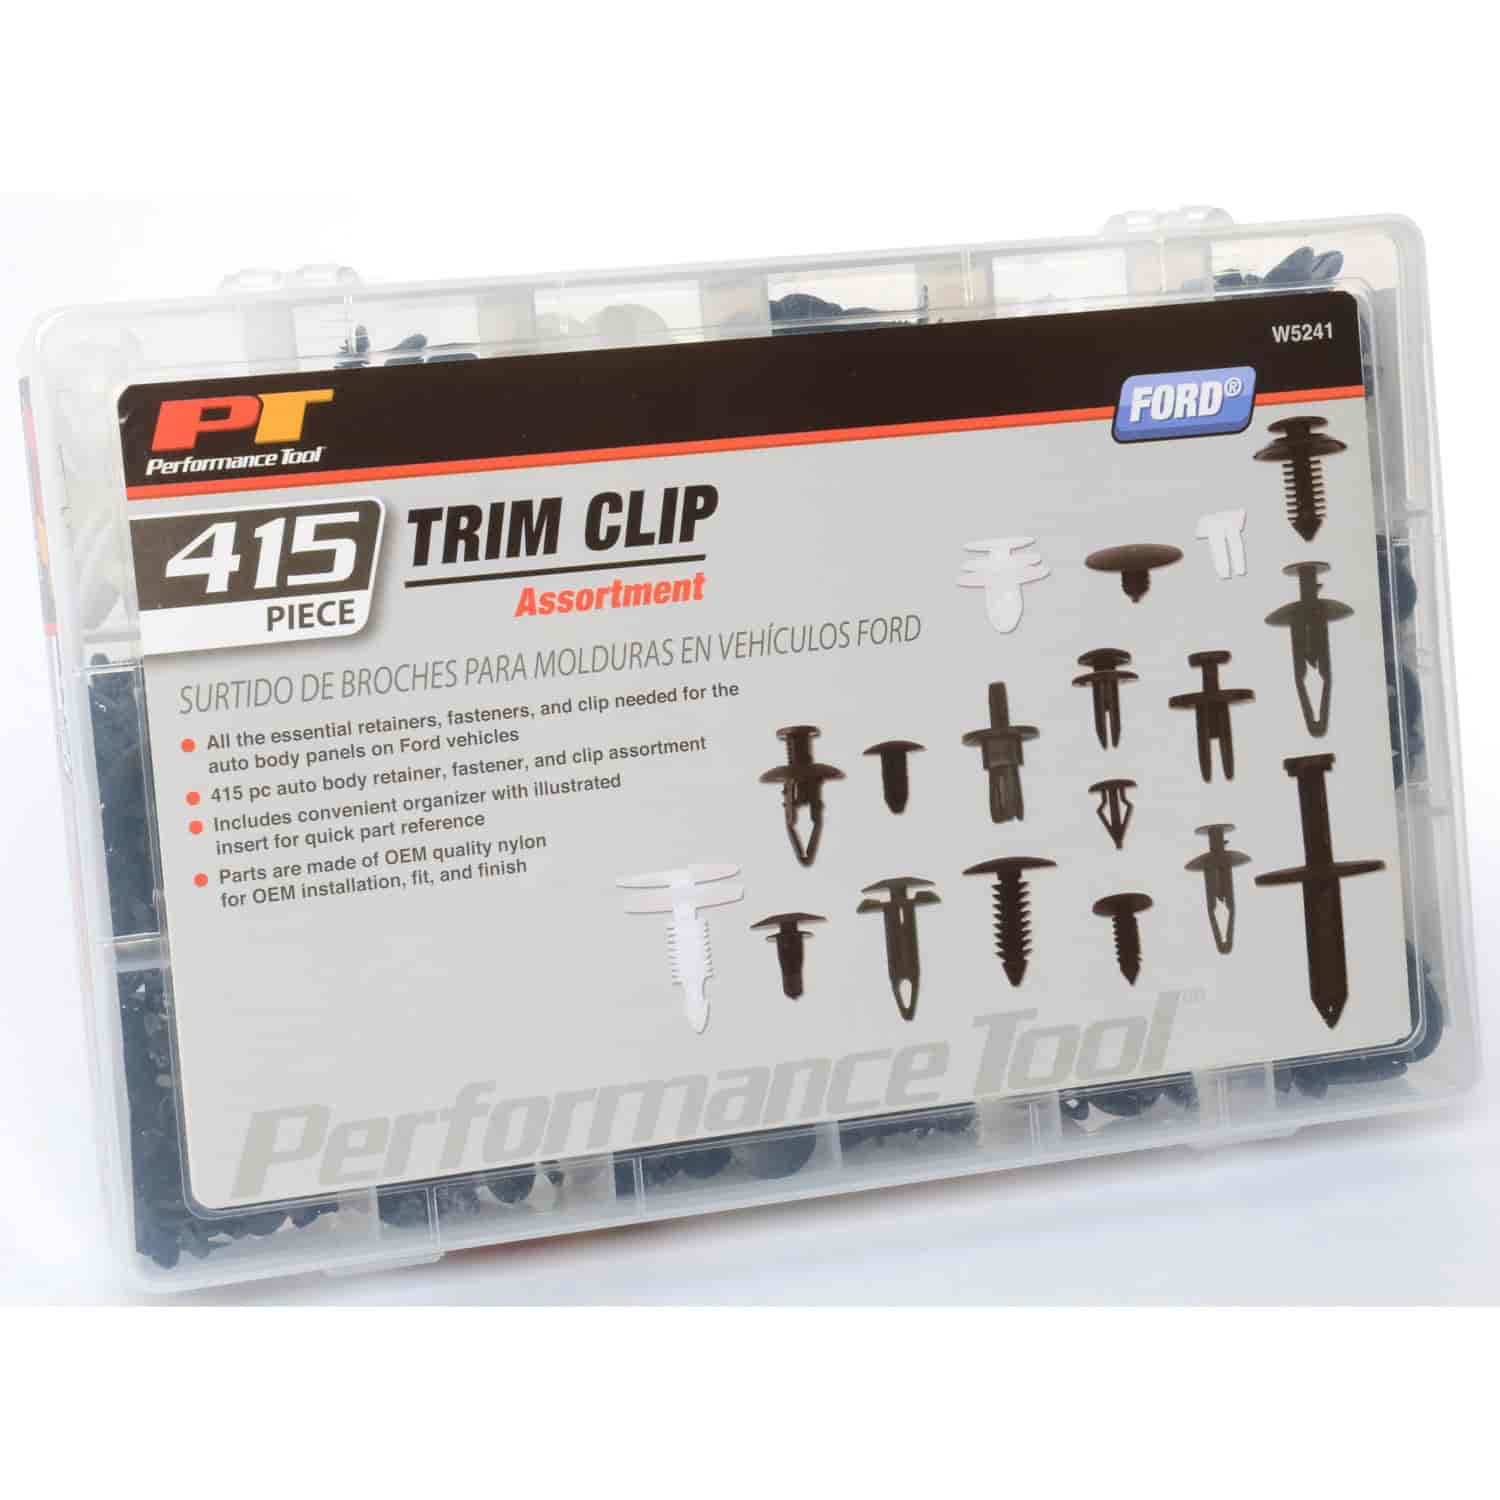 Ford Trim Clip Assortment 415 Pieces